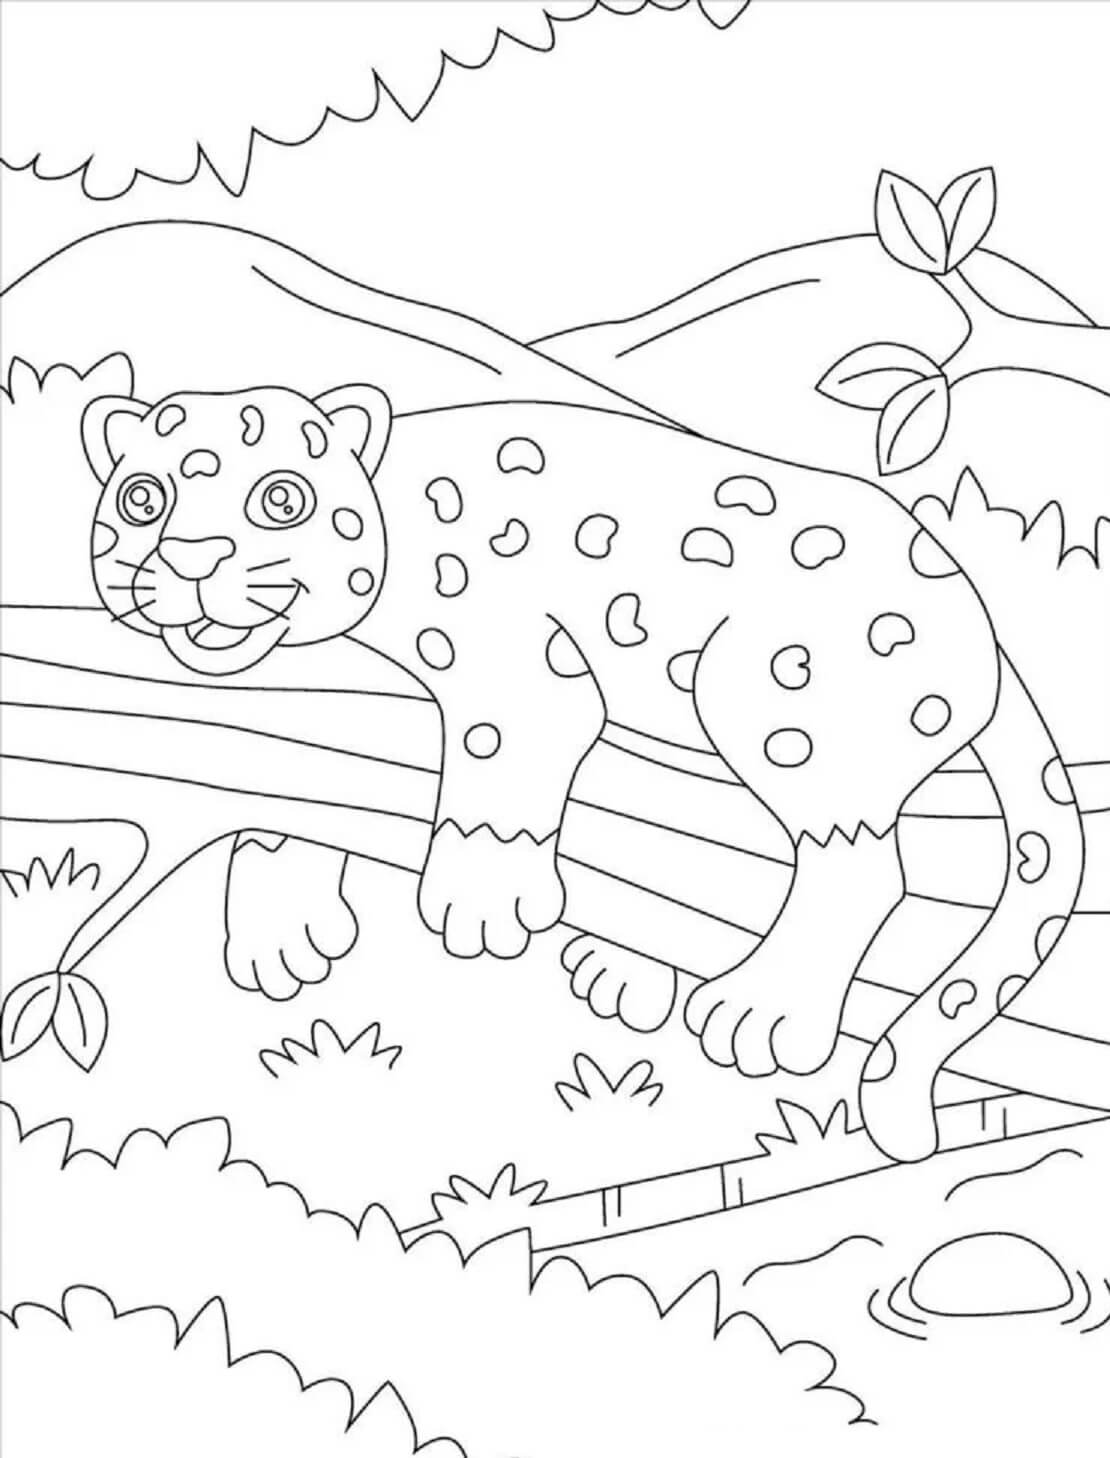 Jaguar Divertido No Galho De Árvore para colorir